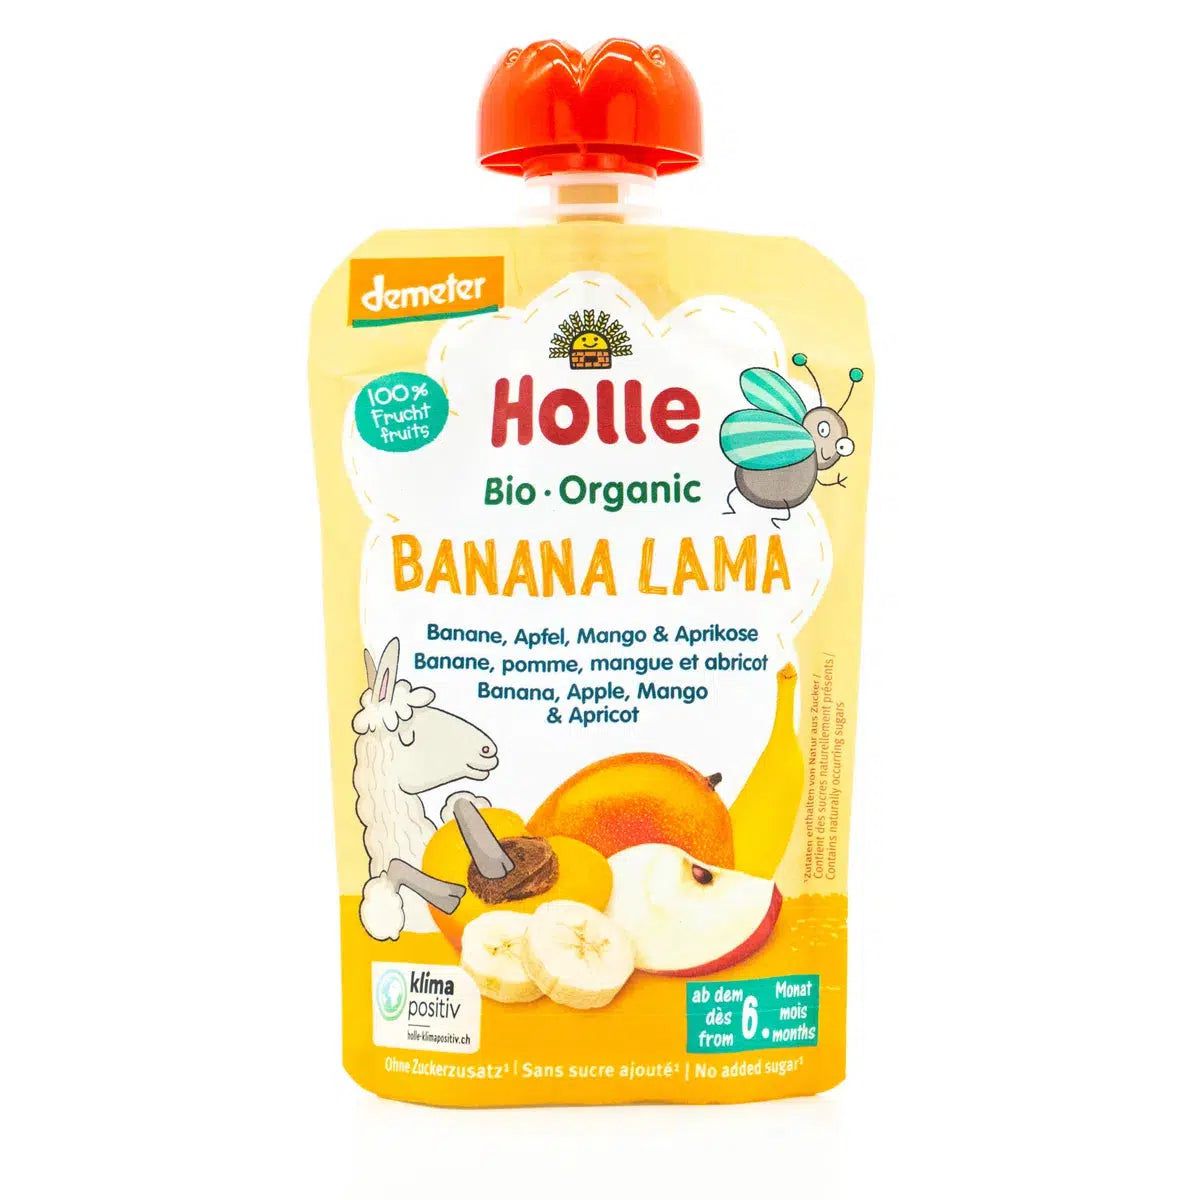 Holle Banana Lama: Banana, Apple, Mango & Apricot (6+ Months) - 12 Pouches